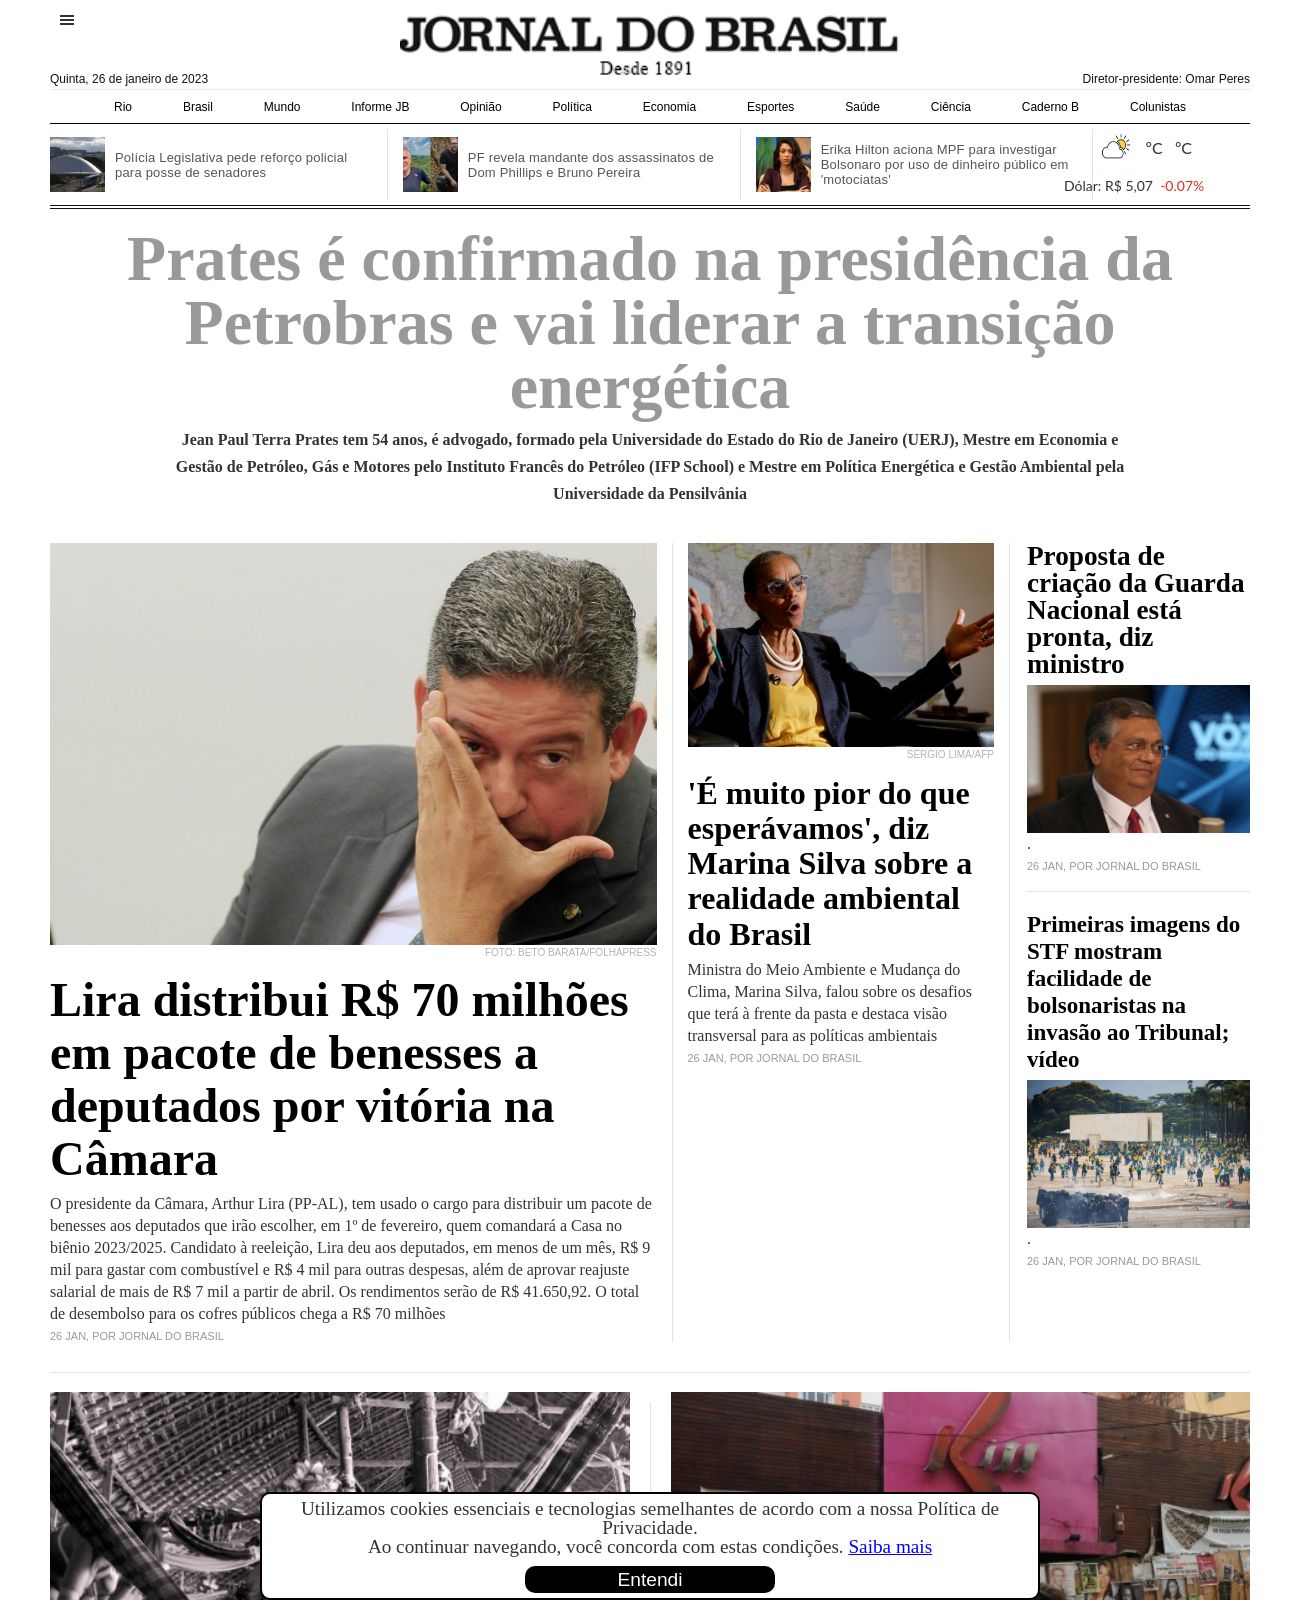 Jornal do Brasil at 2023-01-26 20:14:27-03:00 local time